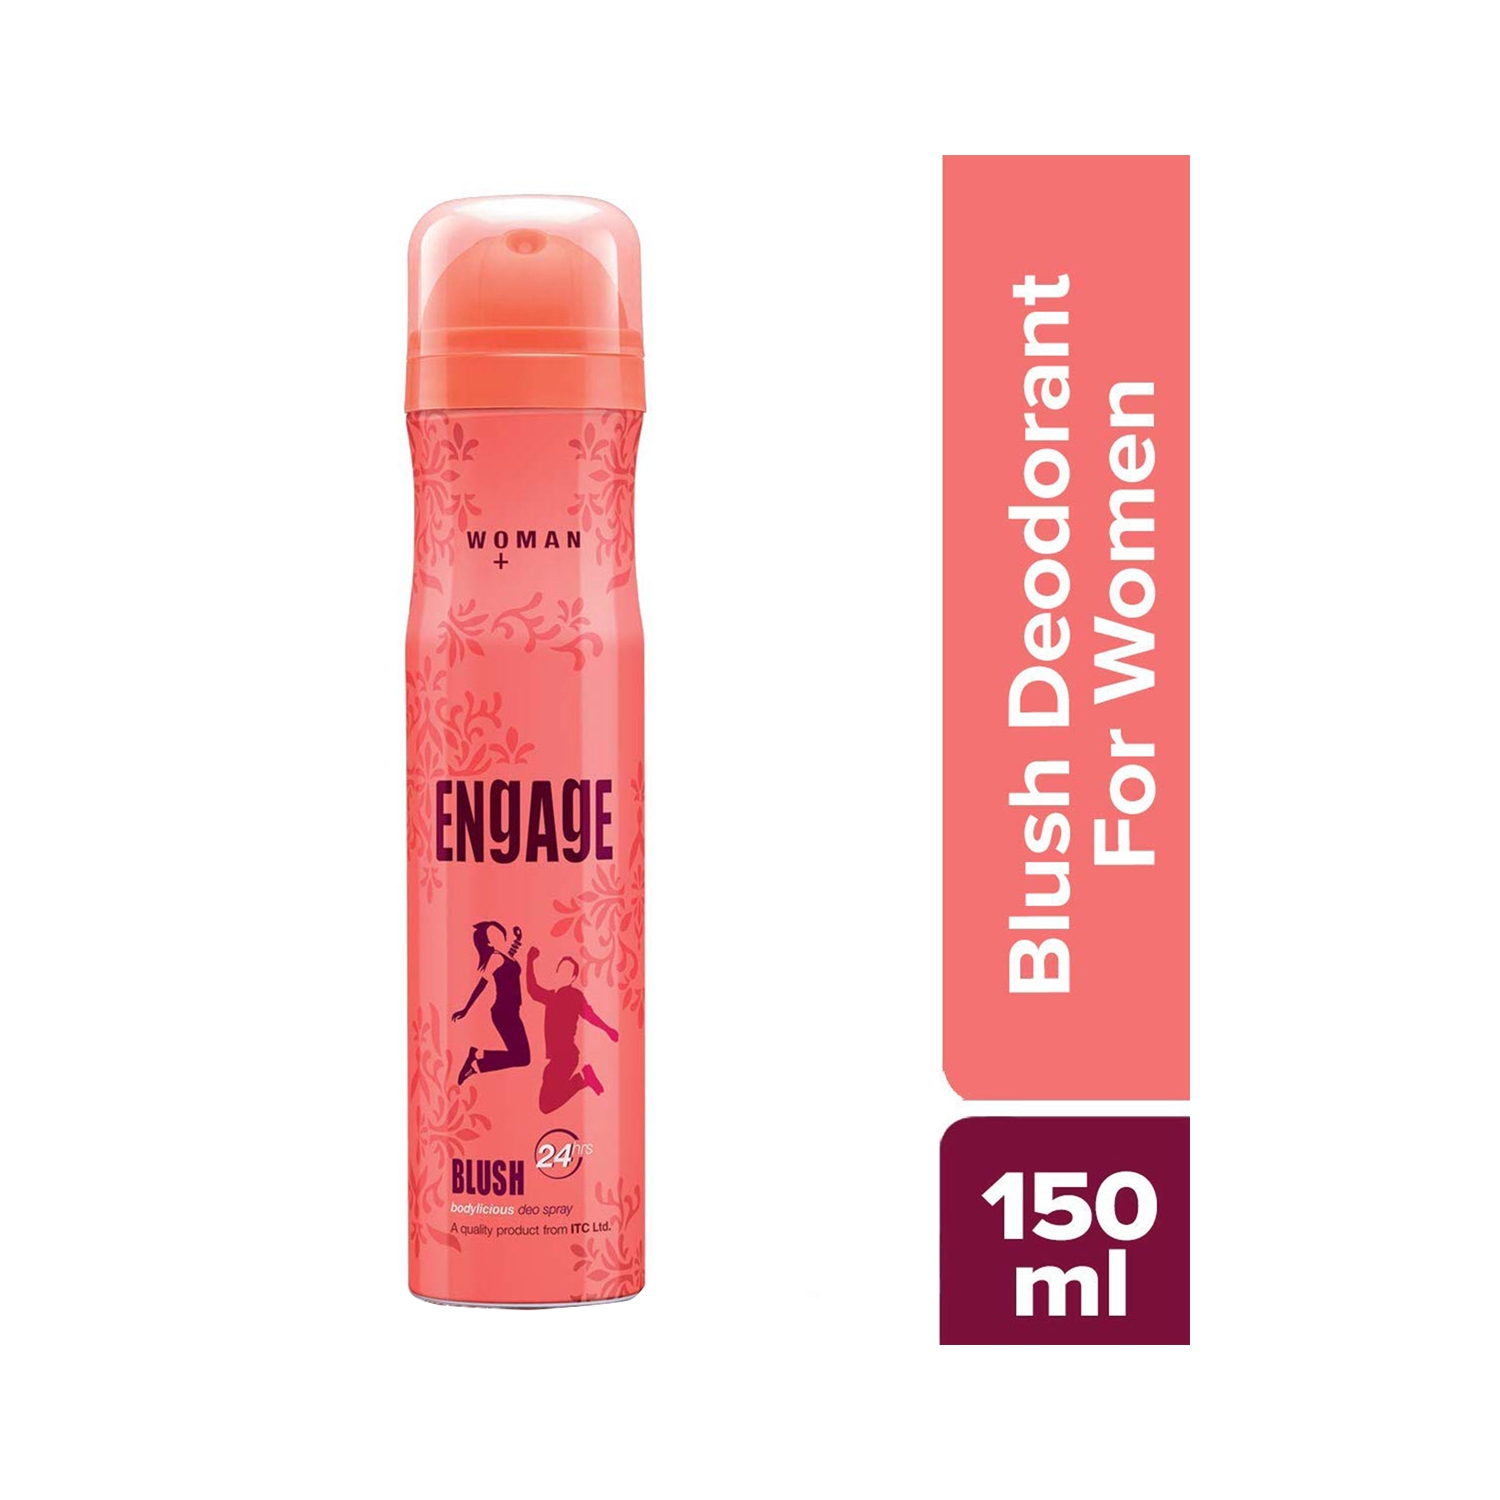 Engage Blush Deodorant Spray For Women (150ml)